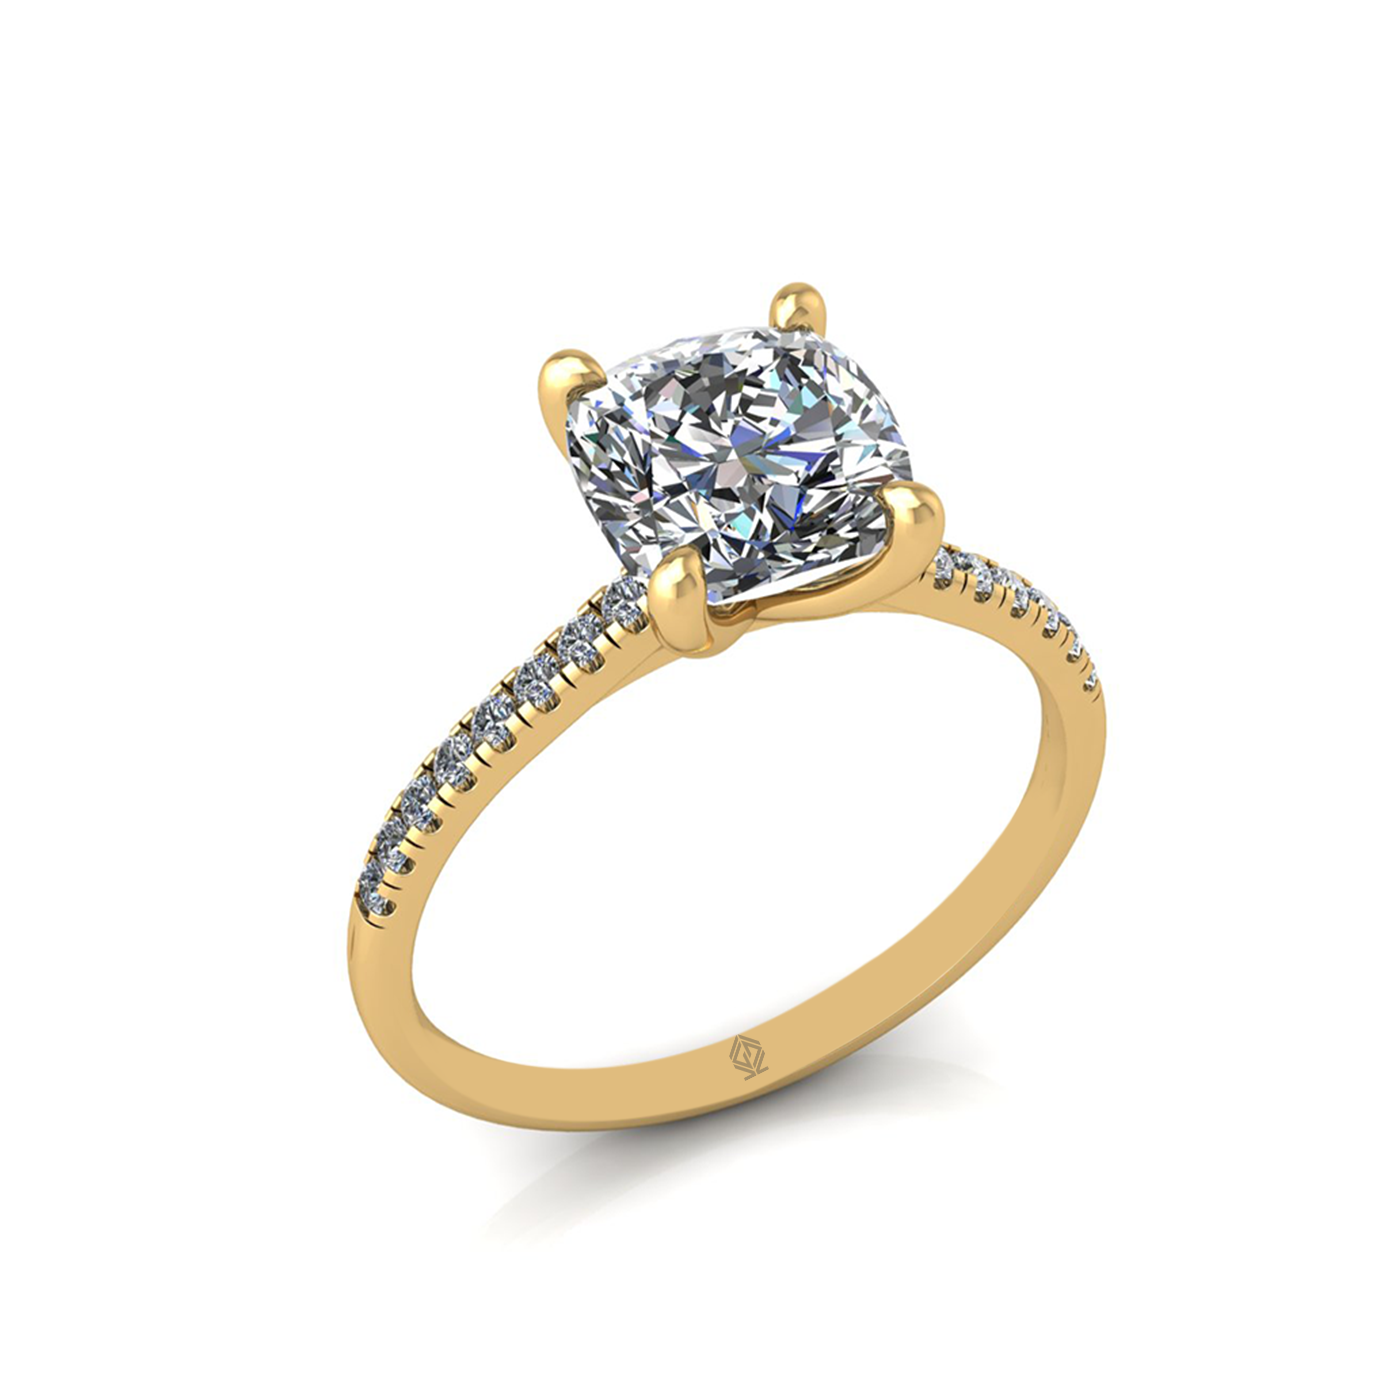 18k yellow gold 2.0ct 4 prongs cushion cut diamond engagement ring with whisper thin pavÉ set band